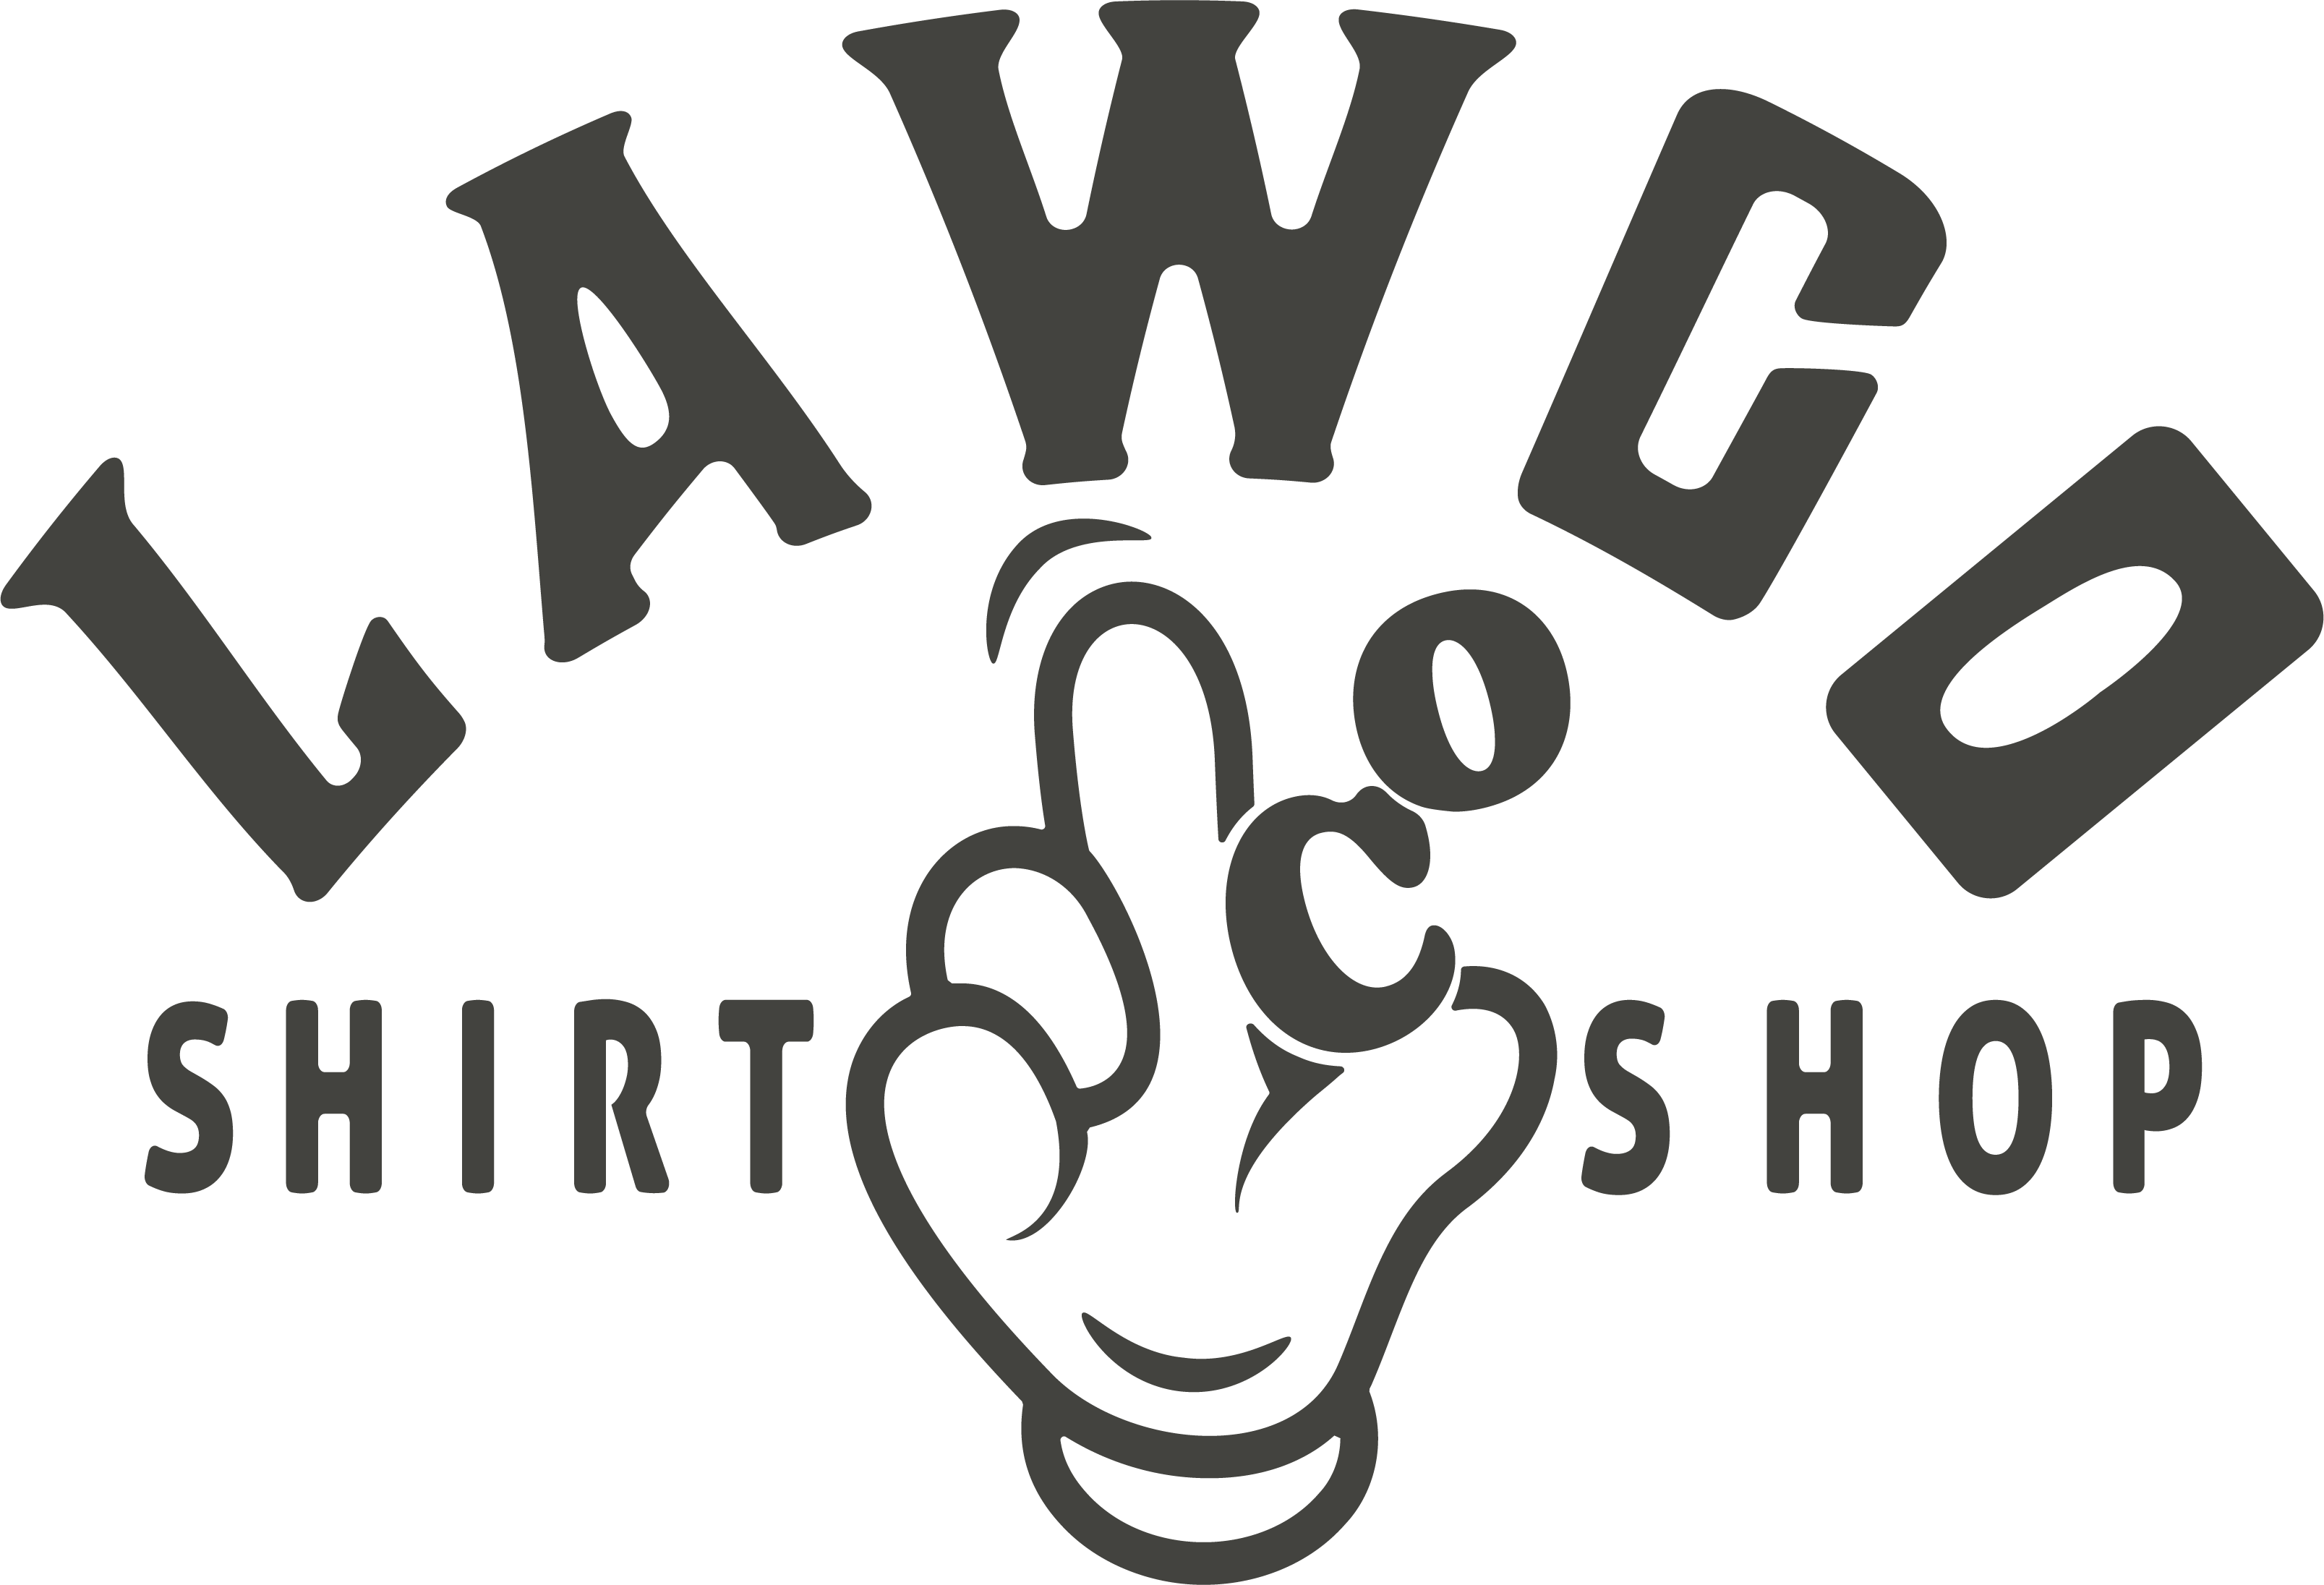 LawcoShirtShop